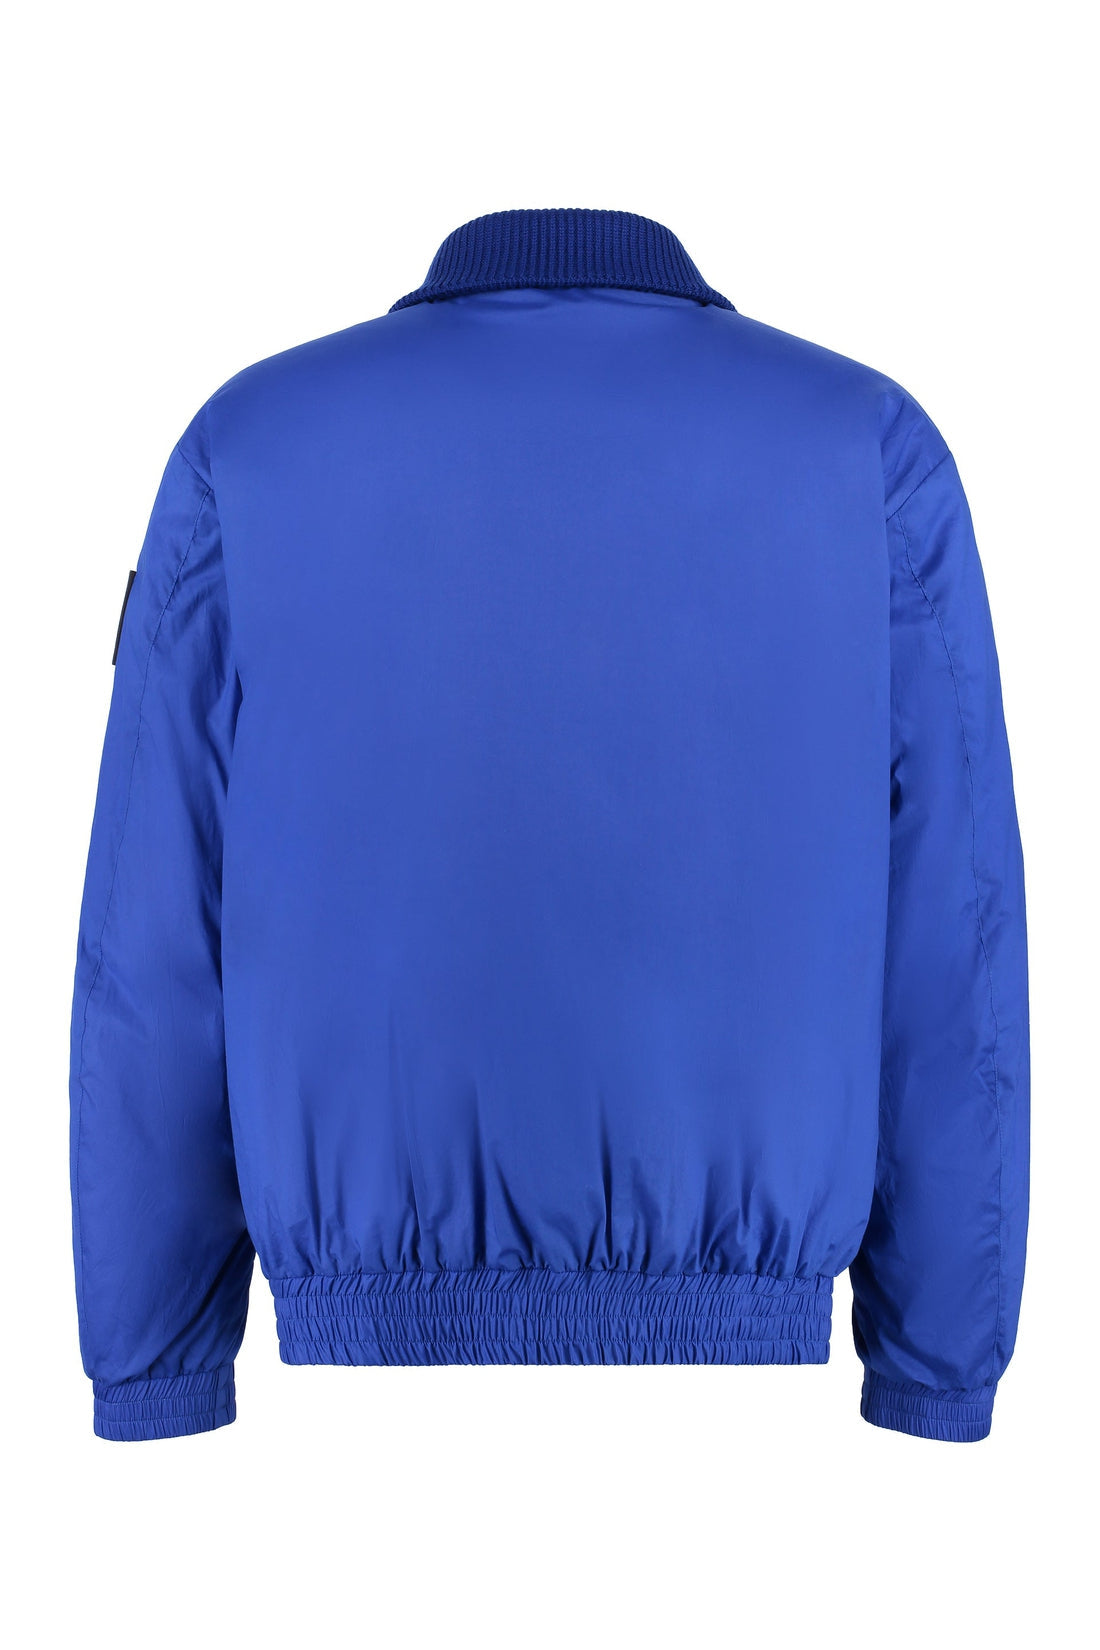 Moncler Genius-OUTLET-SALE-1 Moncler JW Anderson - Skiddaw short down jacket-ARCHIVIST